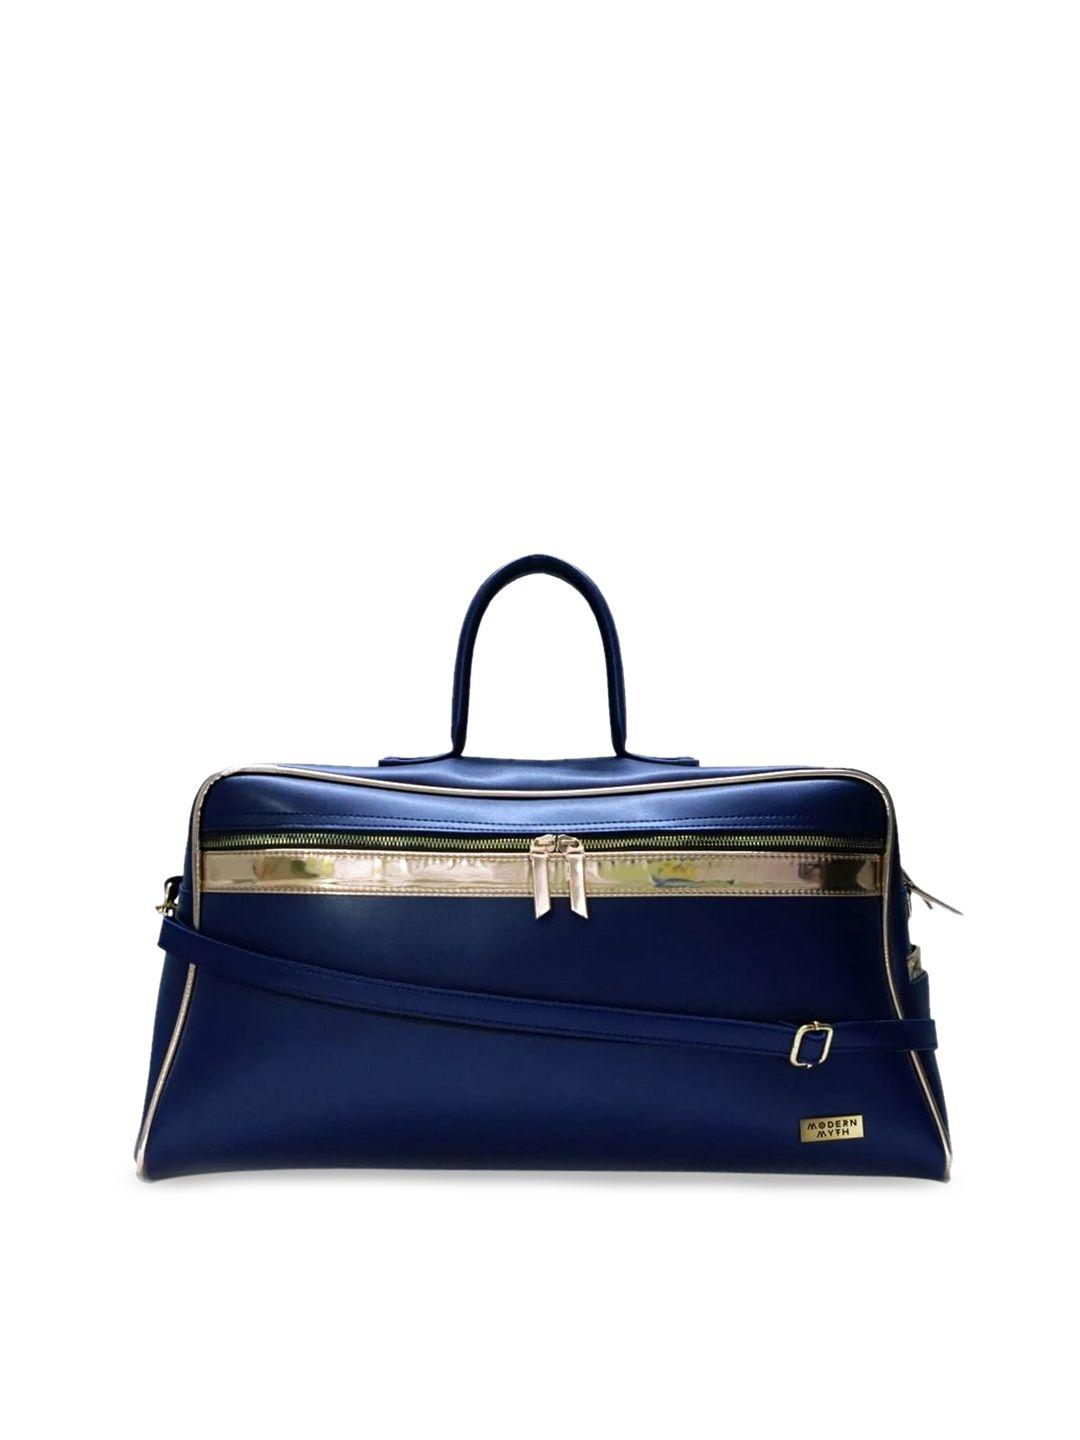 modern myth navy blue & rose-gold medium duffel bag